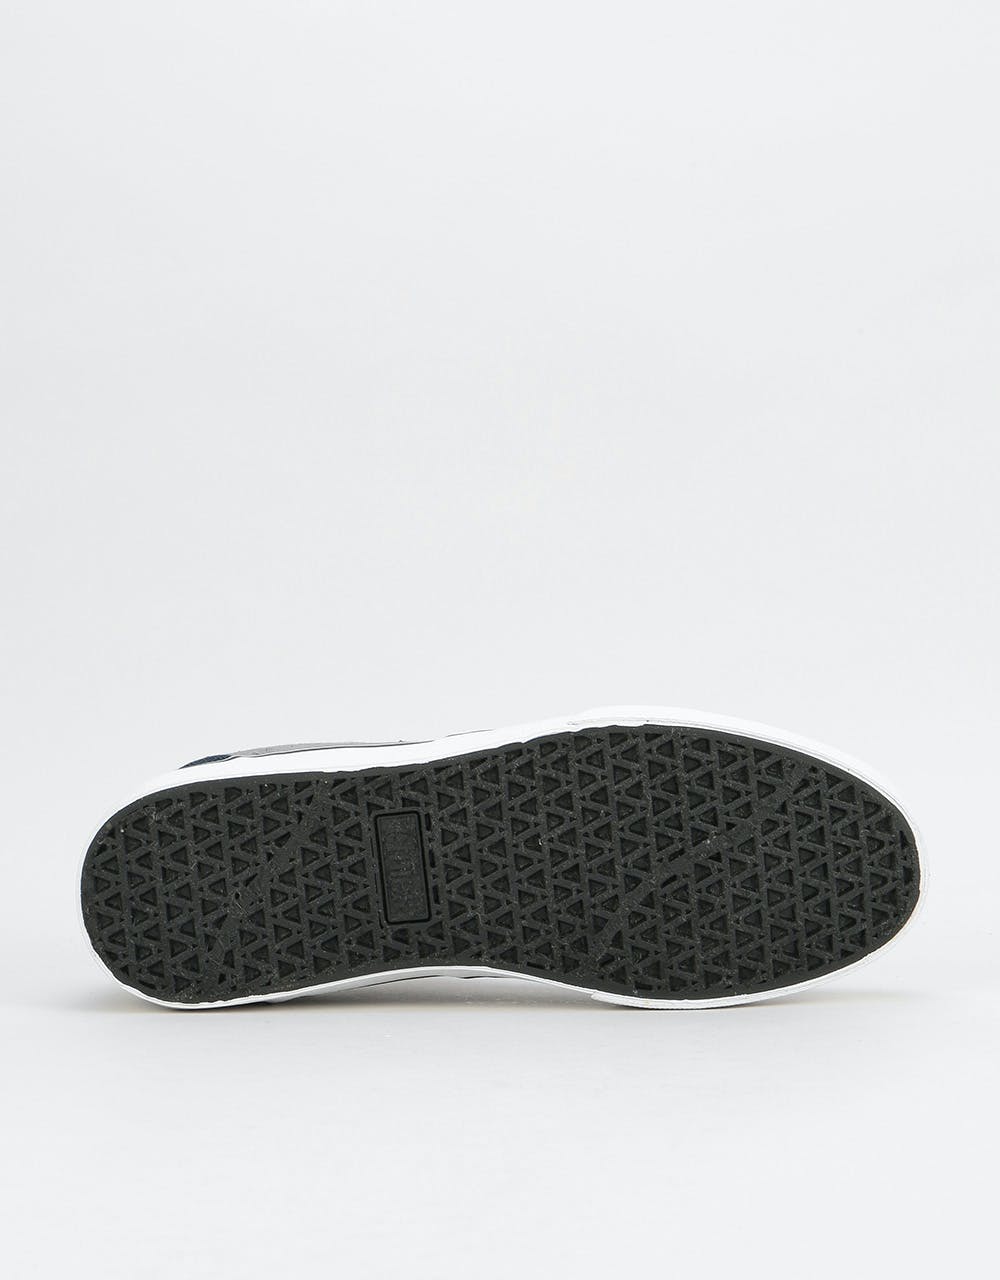 Etnies Blitz Skate Shoes - Navy/Grey